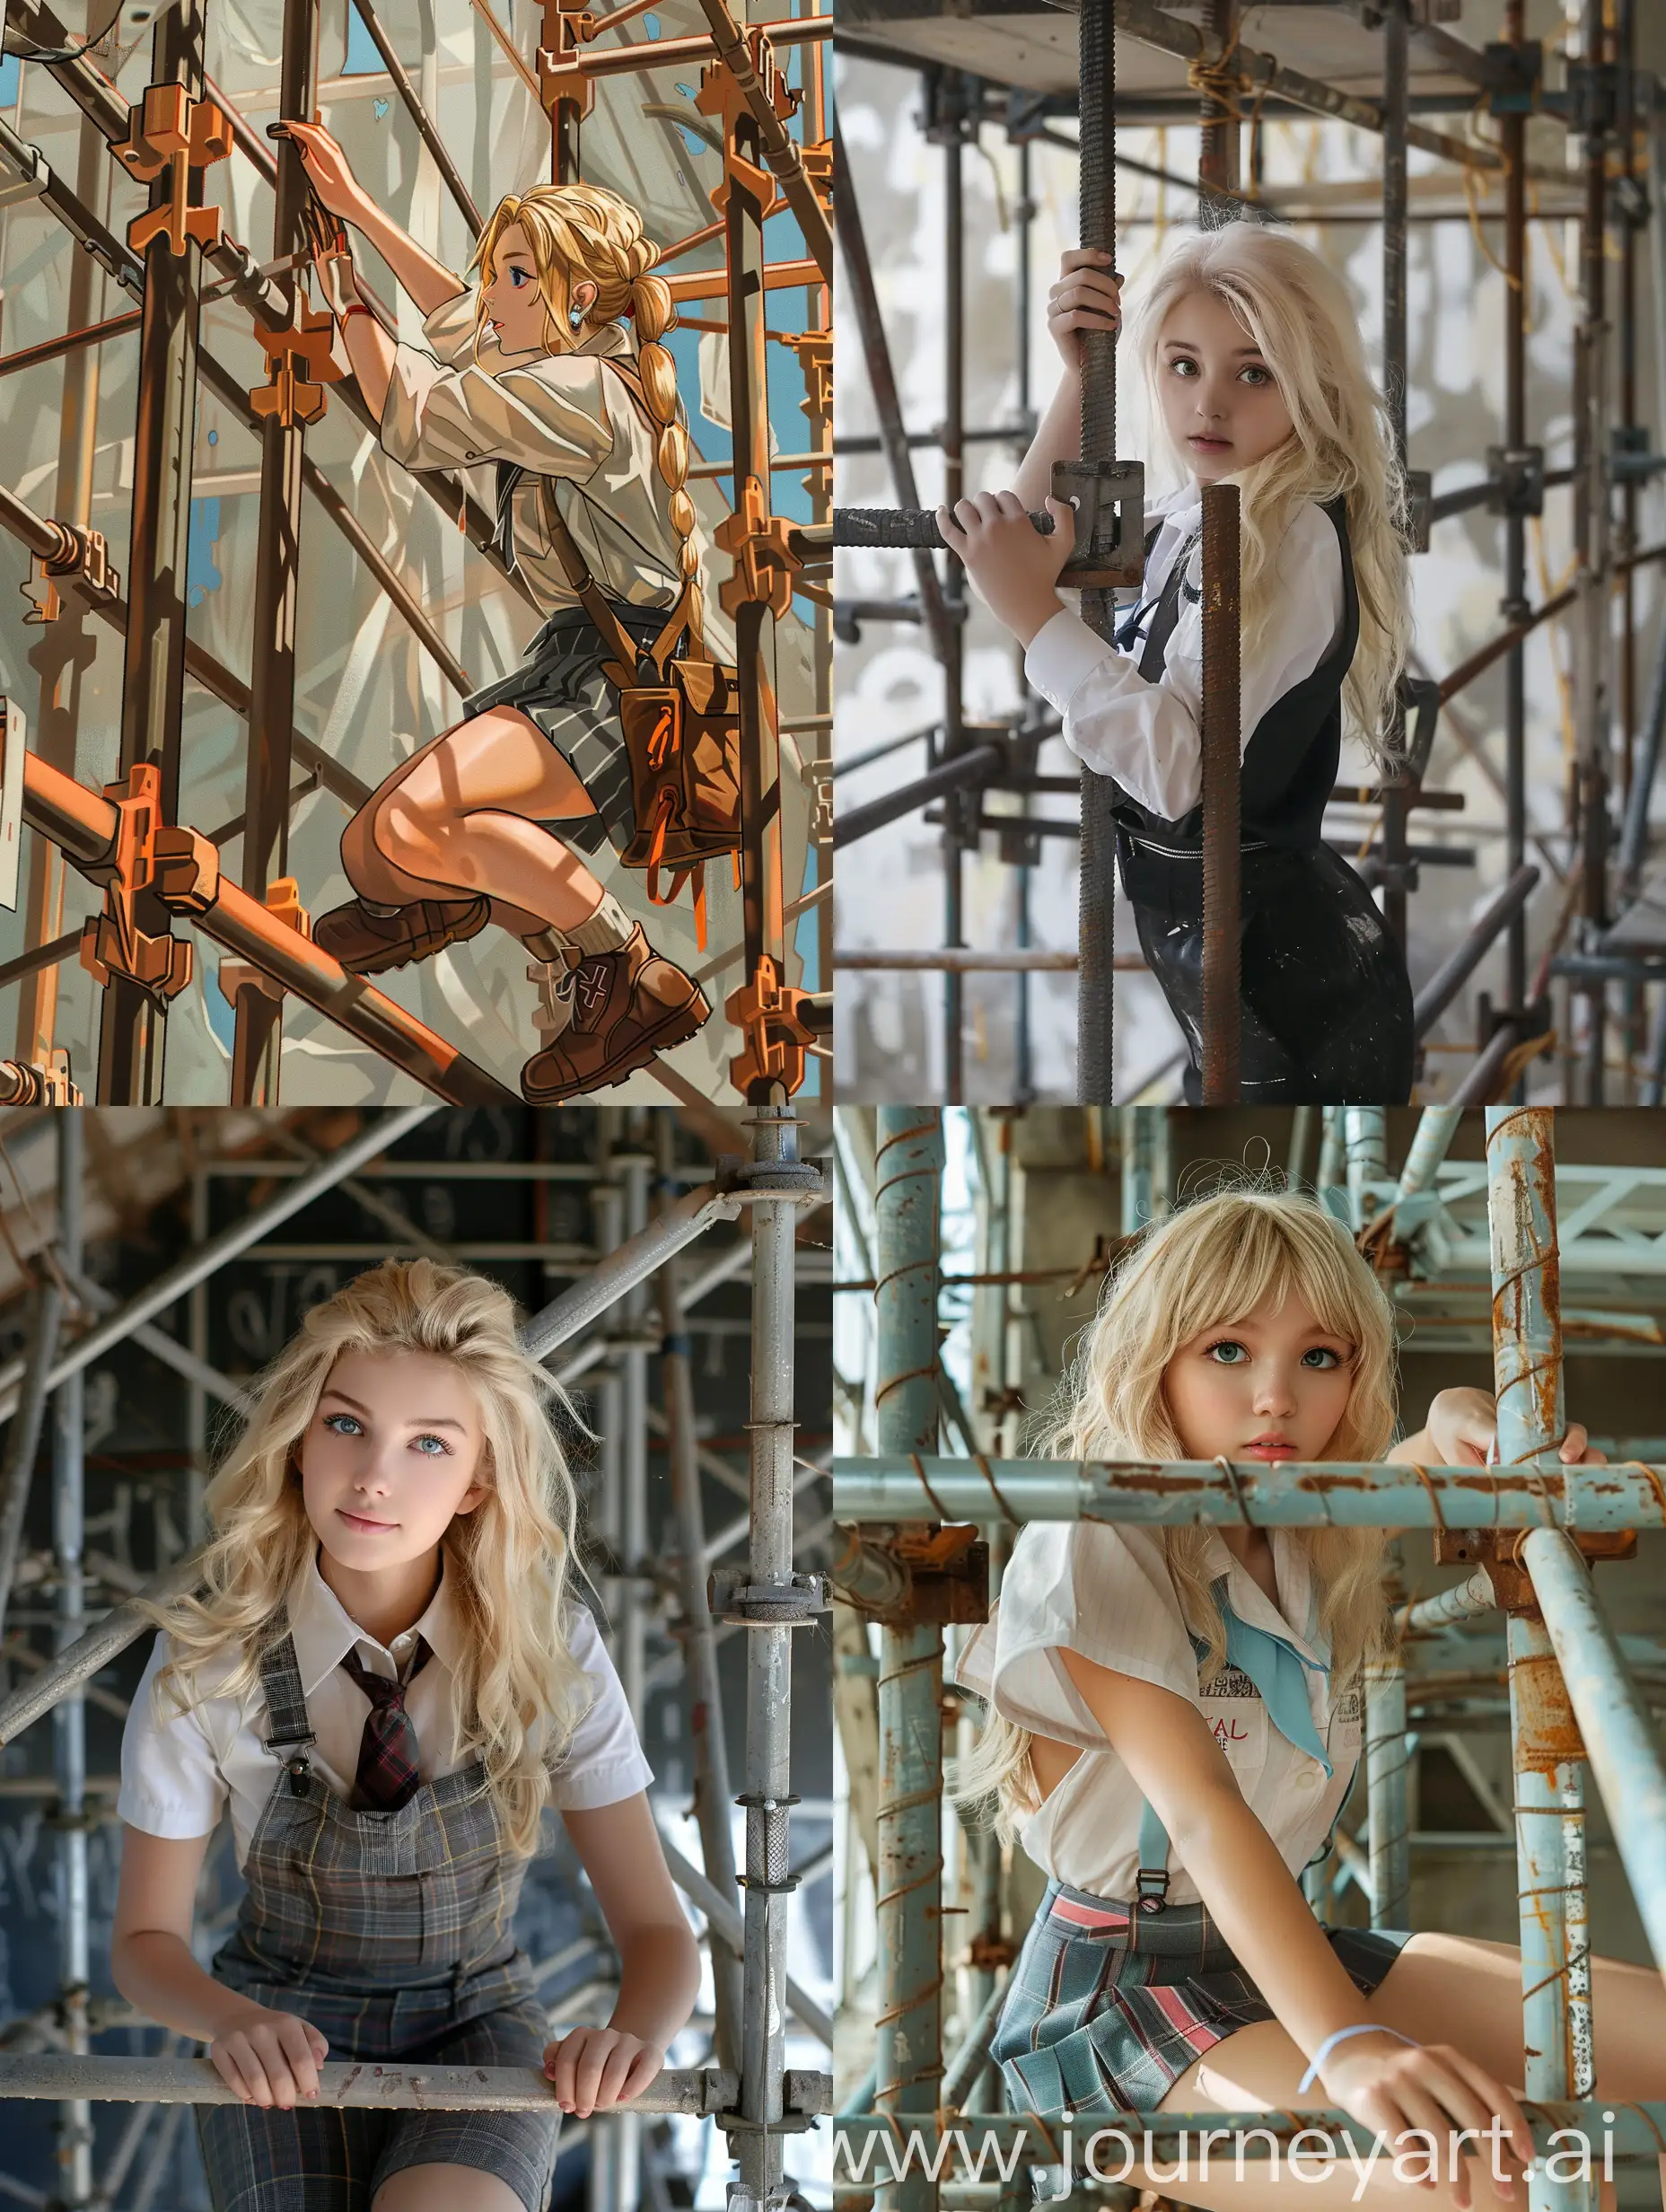 beauty girl, blonde hair, 19 years old, school uniform, is working on a steel scaffolding under construction, 